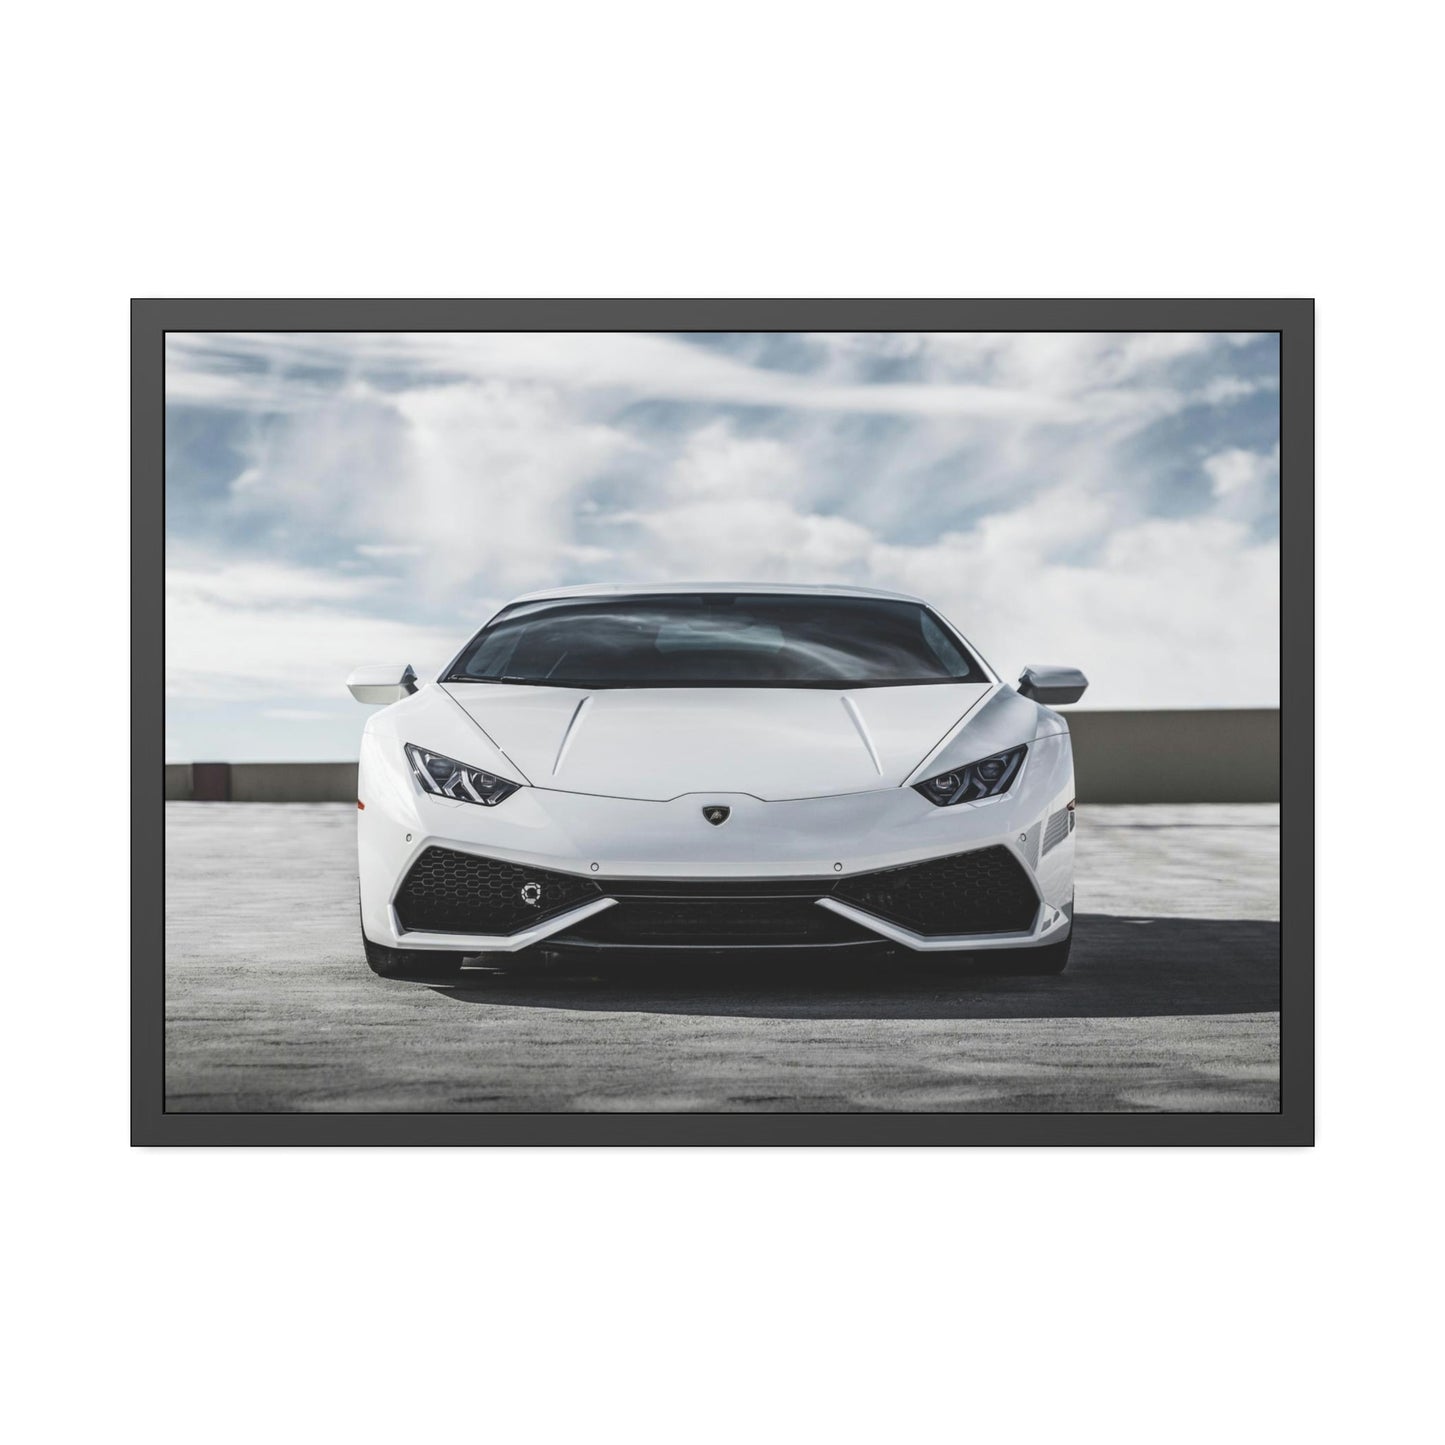 Luxury on Wheels: Lamborghini Canvas & Poster on a High-Quality Print